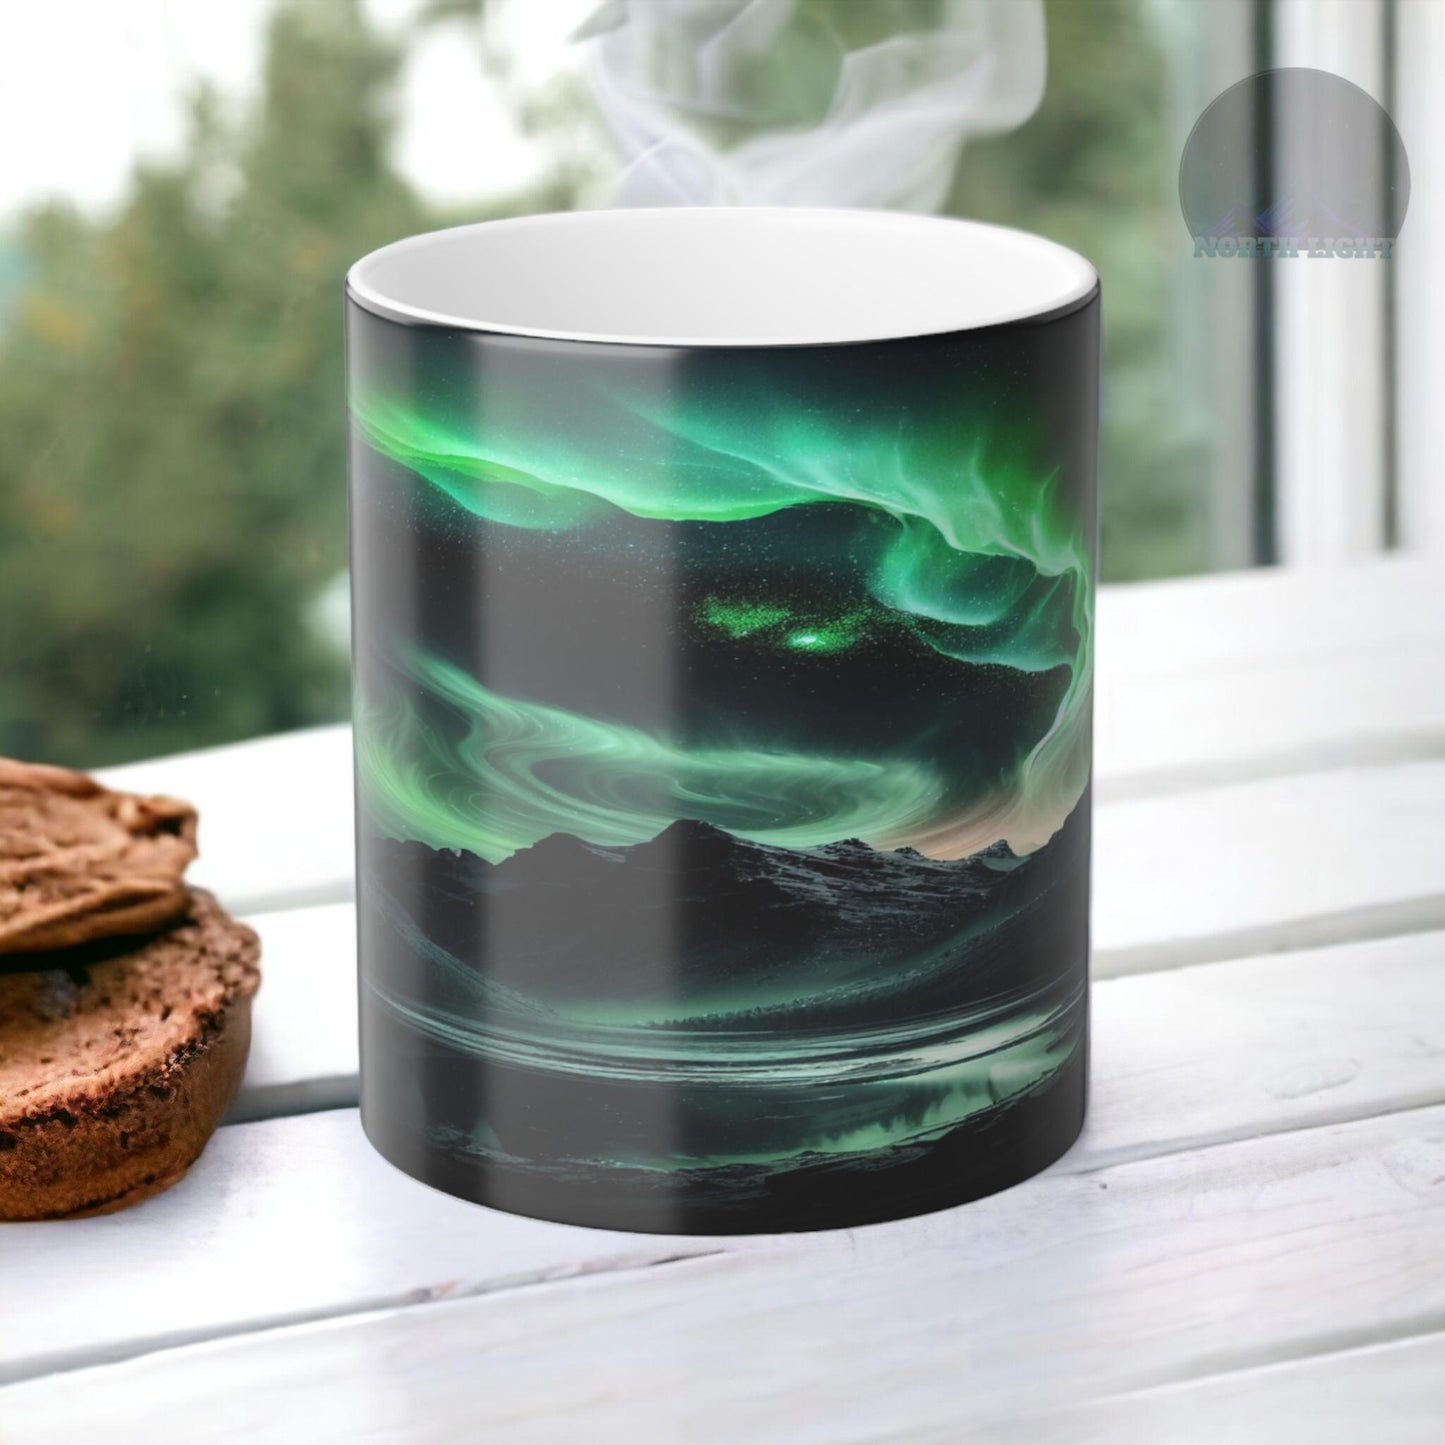 Enchanting Aurora Borealis Heat Sensitive Mug - Northern Lights Magic Color Morphing Mug 11oz - Heat Reactive Night Sky Coffee Cup - Perfect Gift for Nature Lovers 23